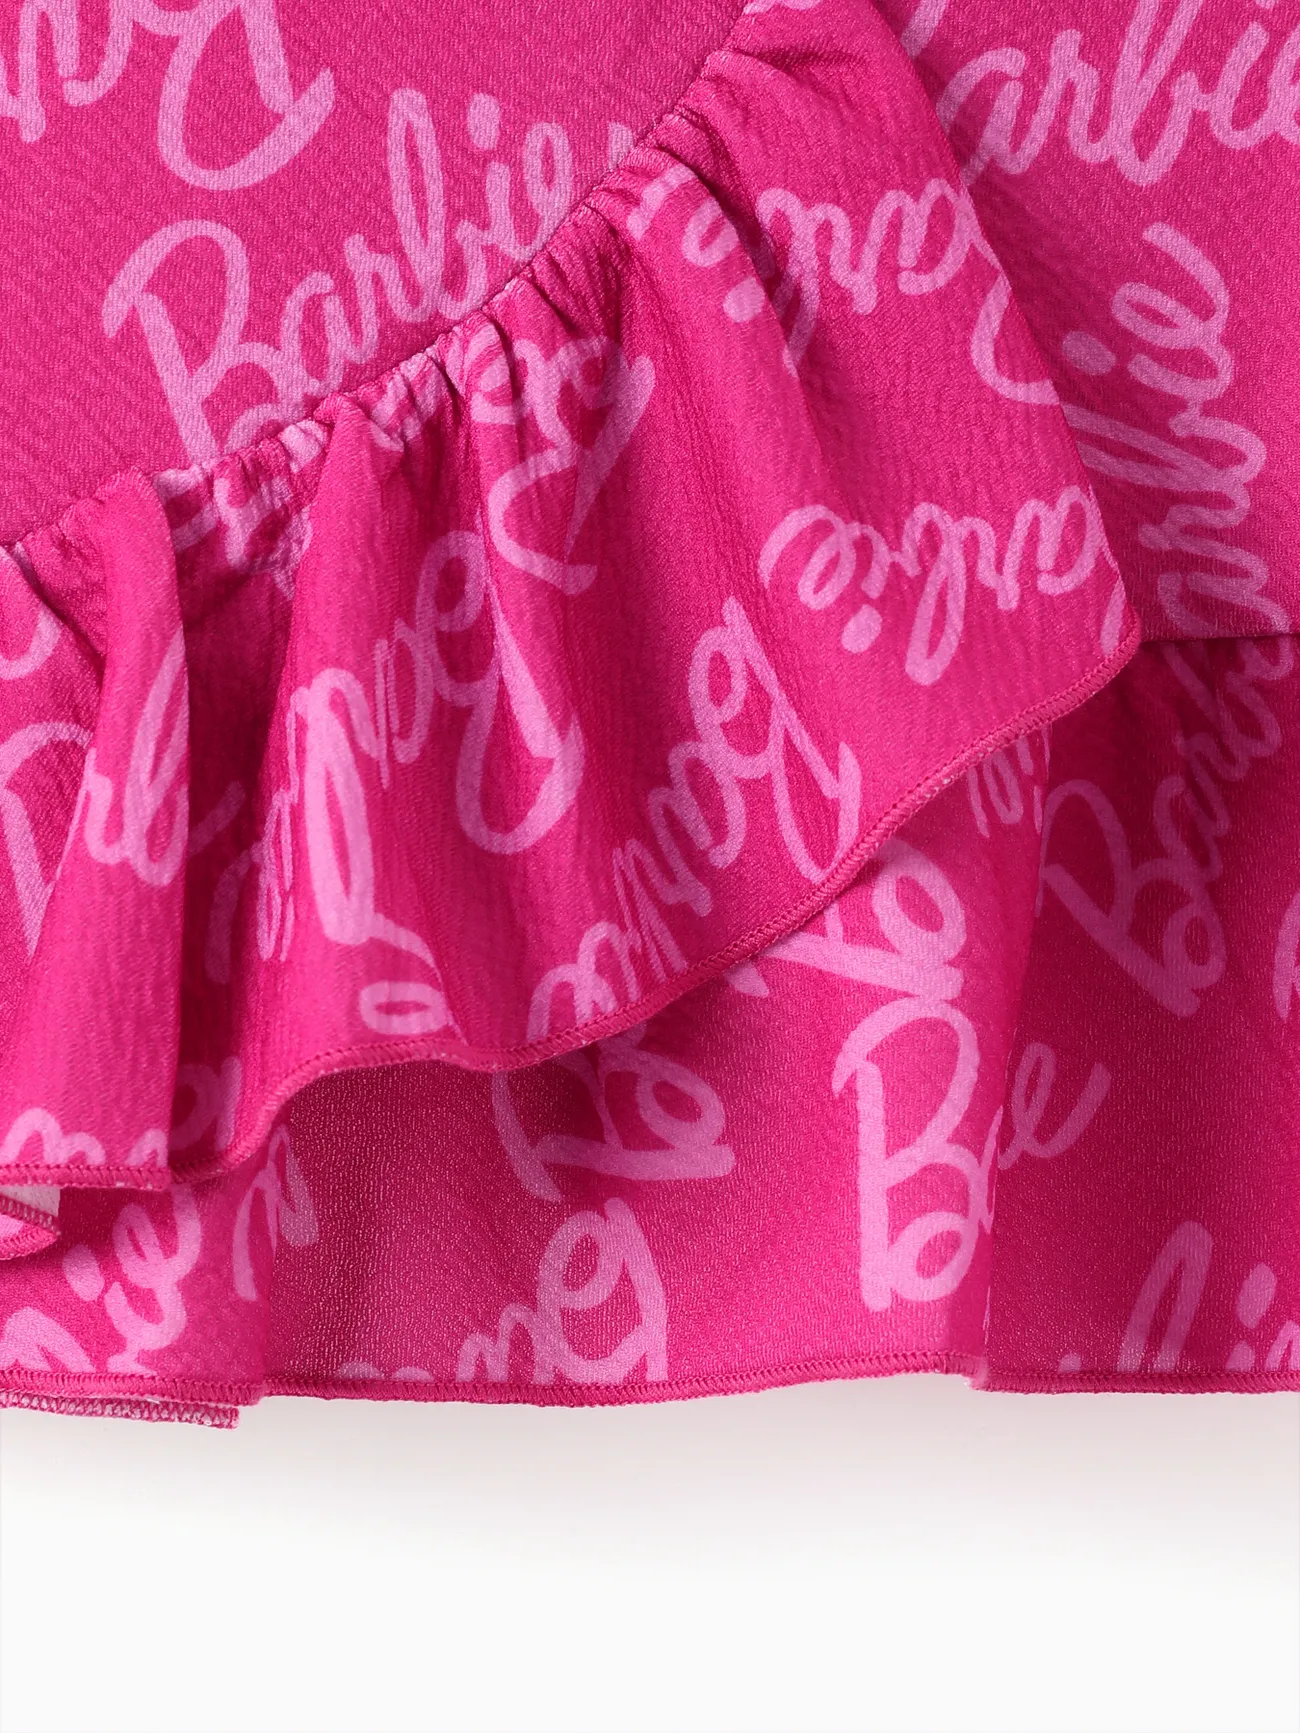 Barbie 2pcs Toddler/Kids Girls Alphabet Print Puff Sleeves Top with Allover Logo Print Skirt Set

  Roseo big image 1